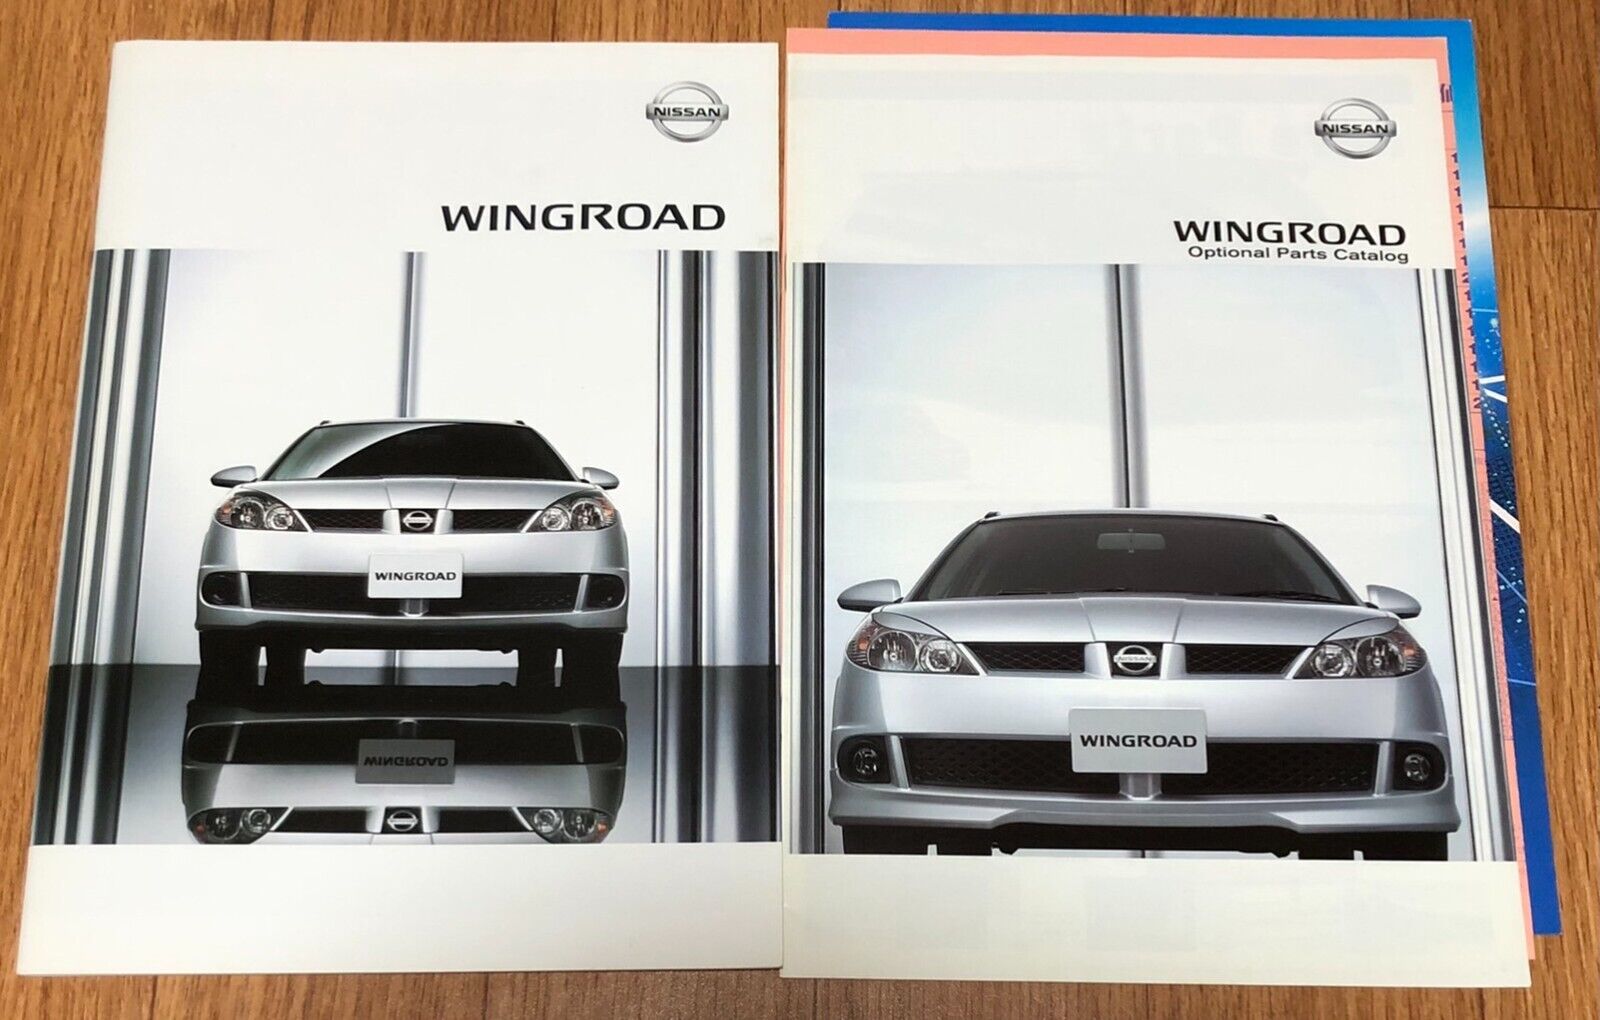 NISSAN WINGROAD Y11 Car Catalog and Optional Parts Catalog